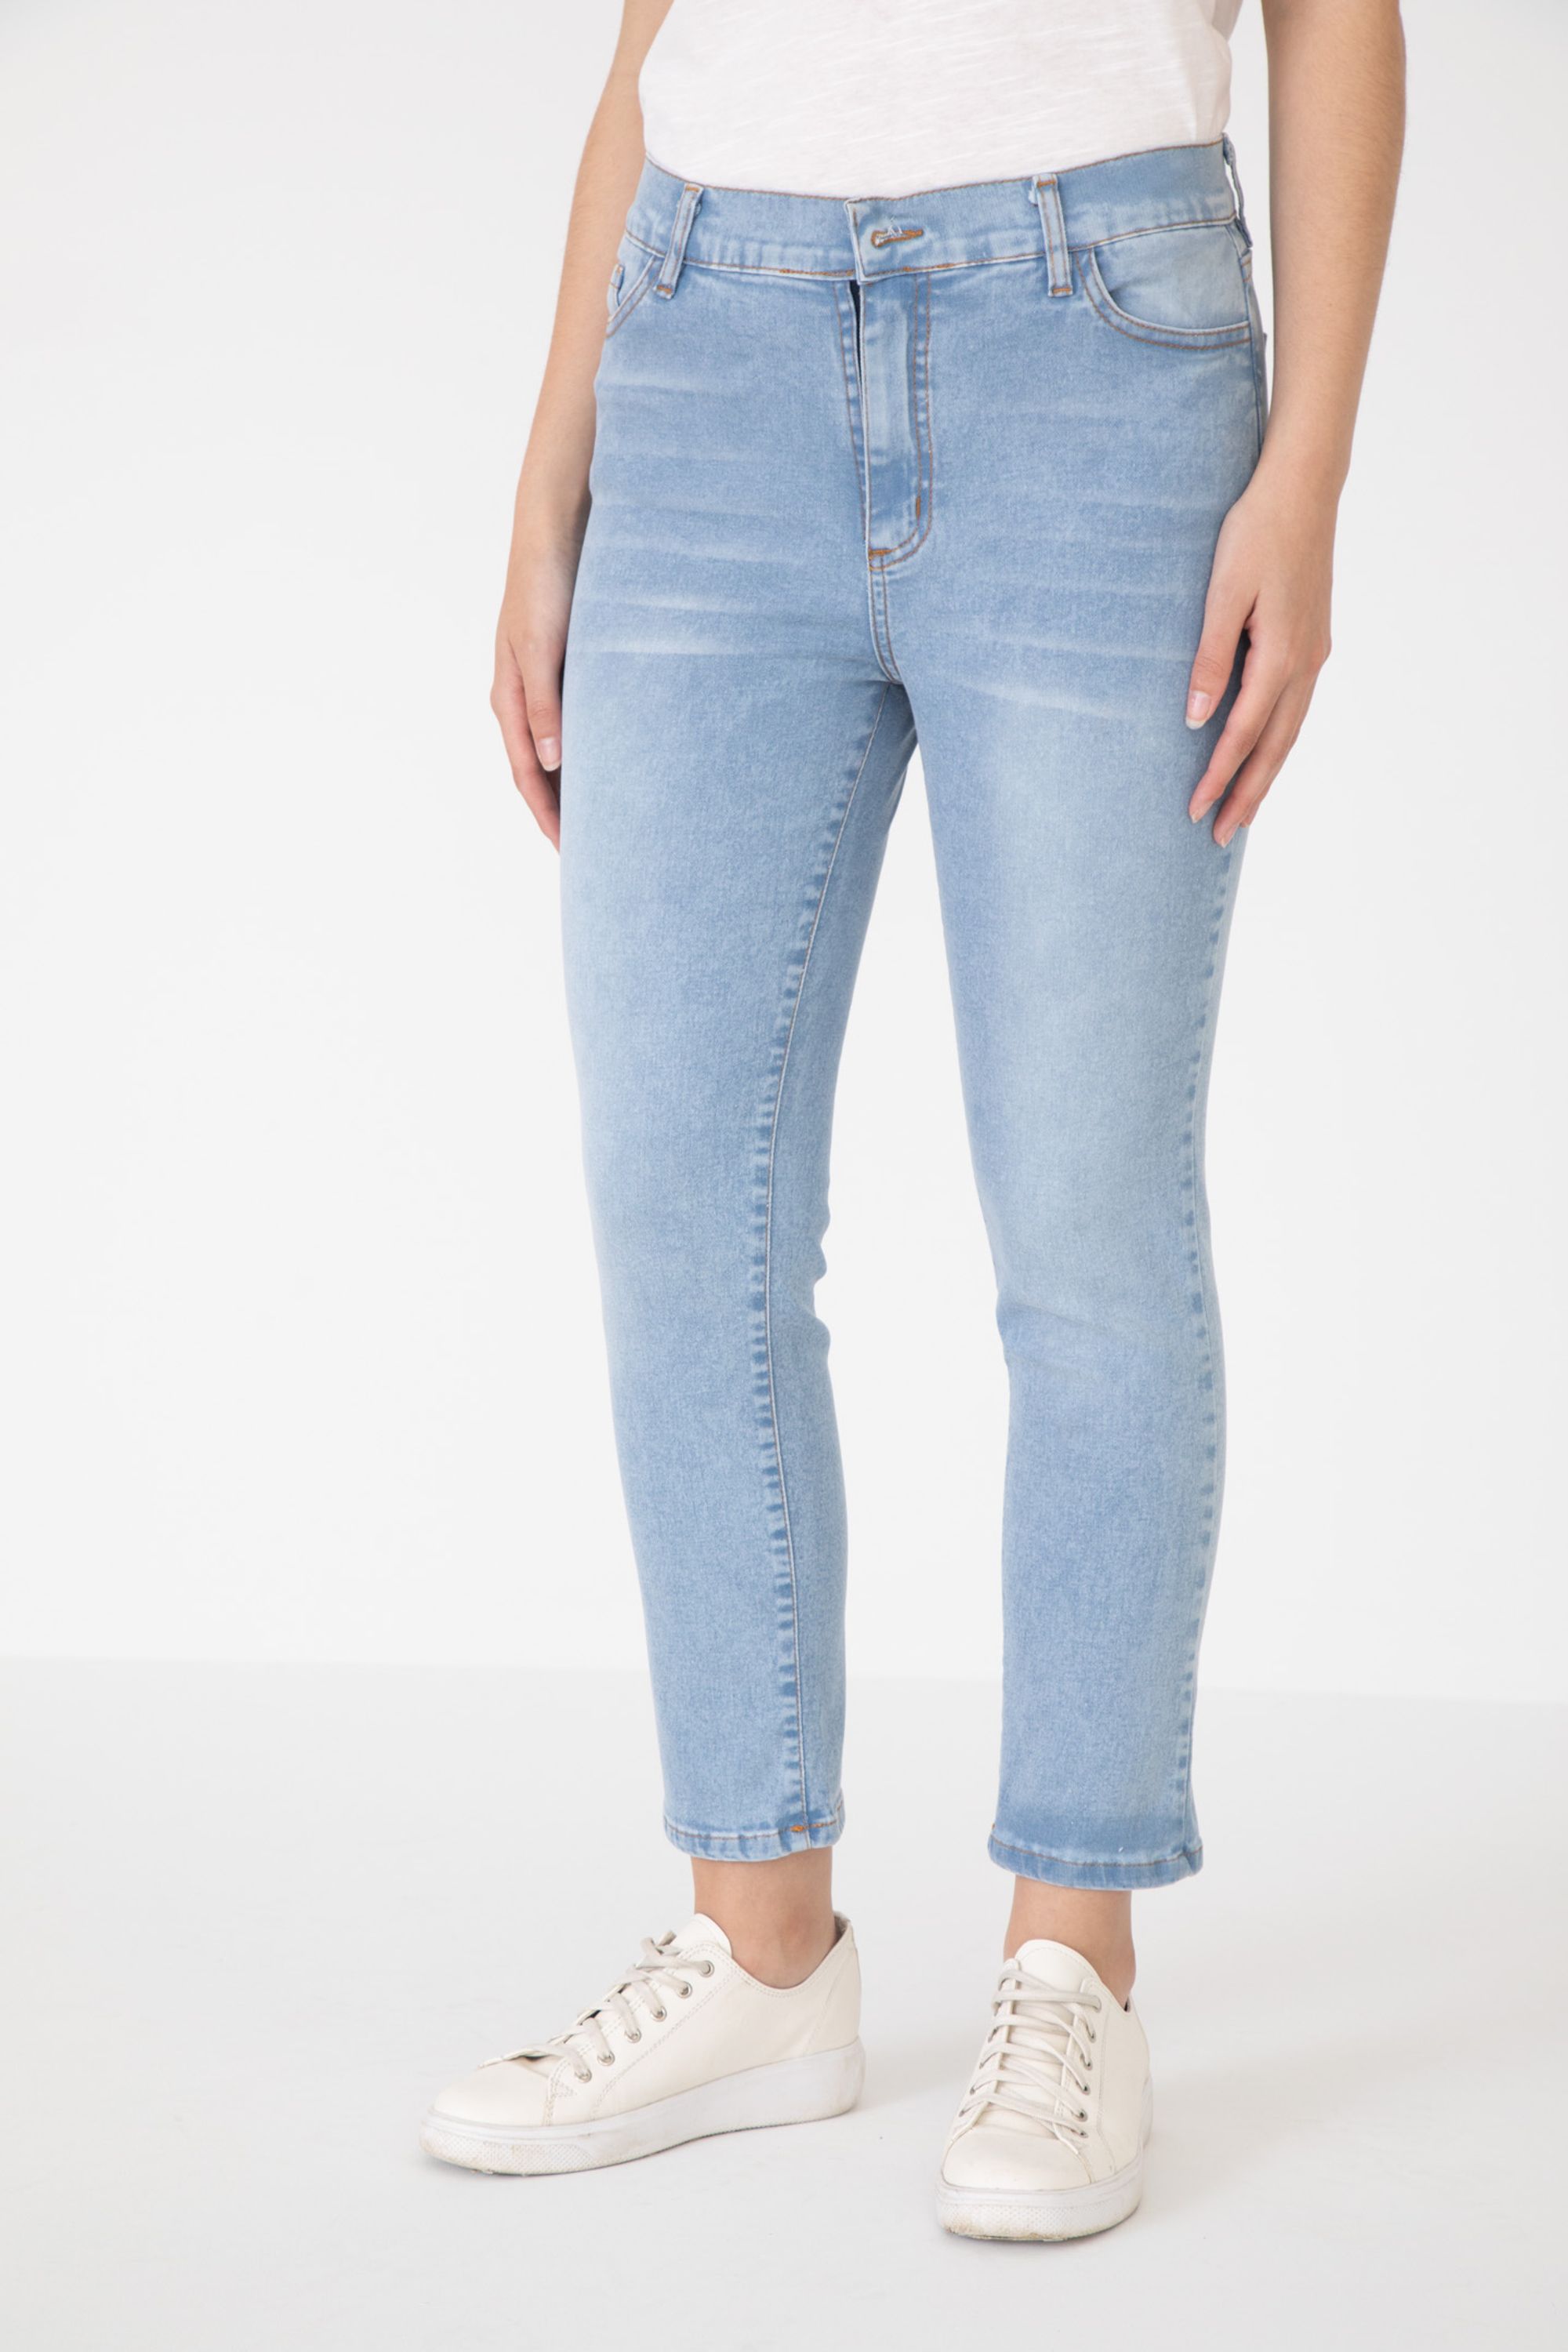 Jeans de Mujer - Yagmour